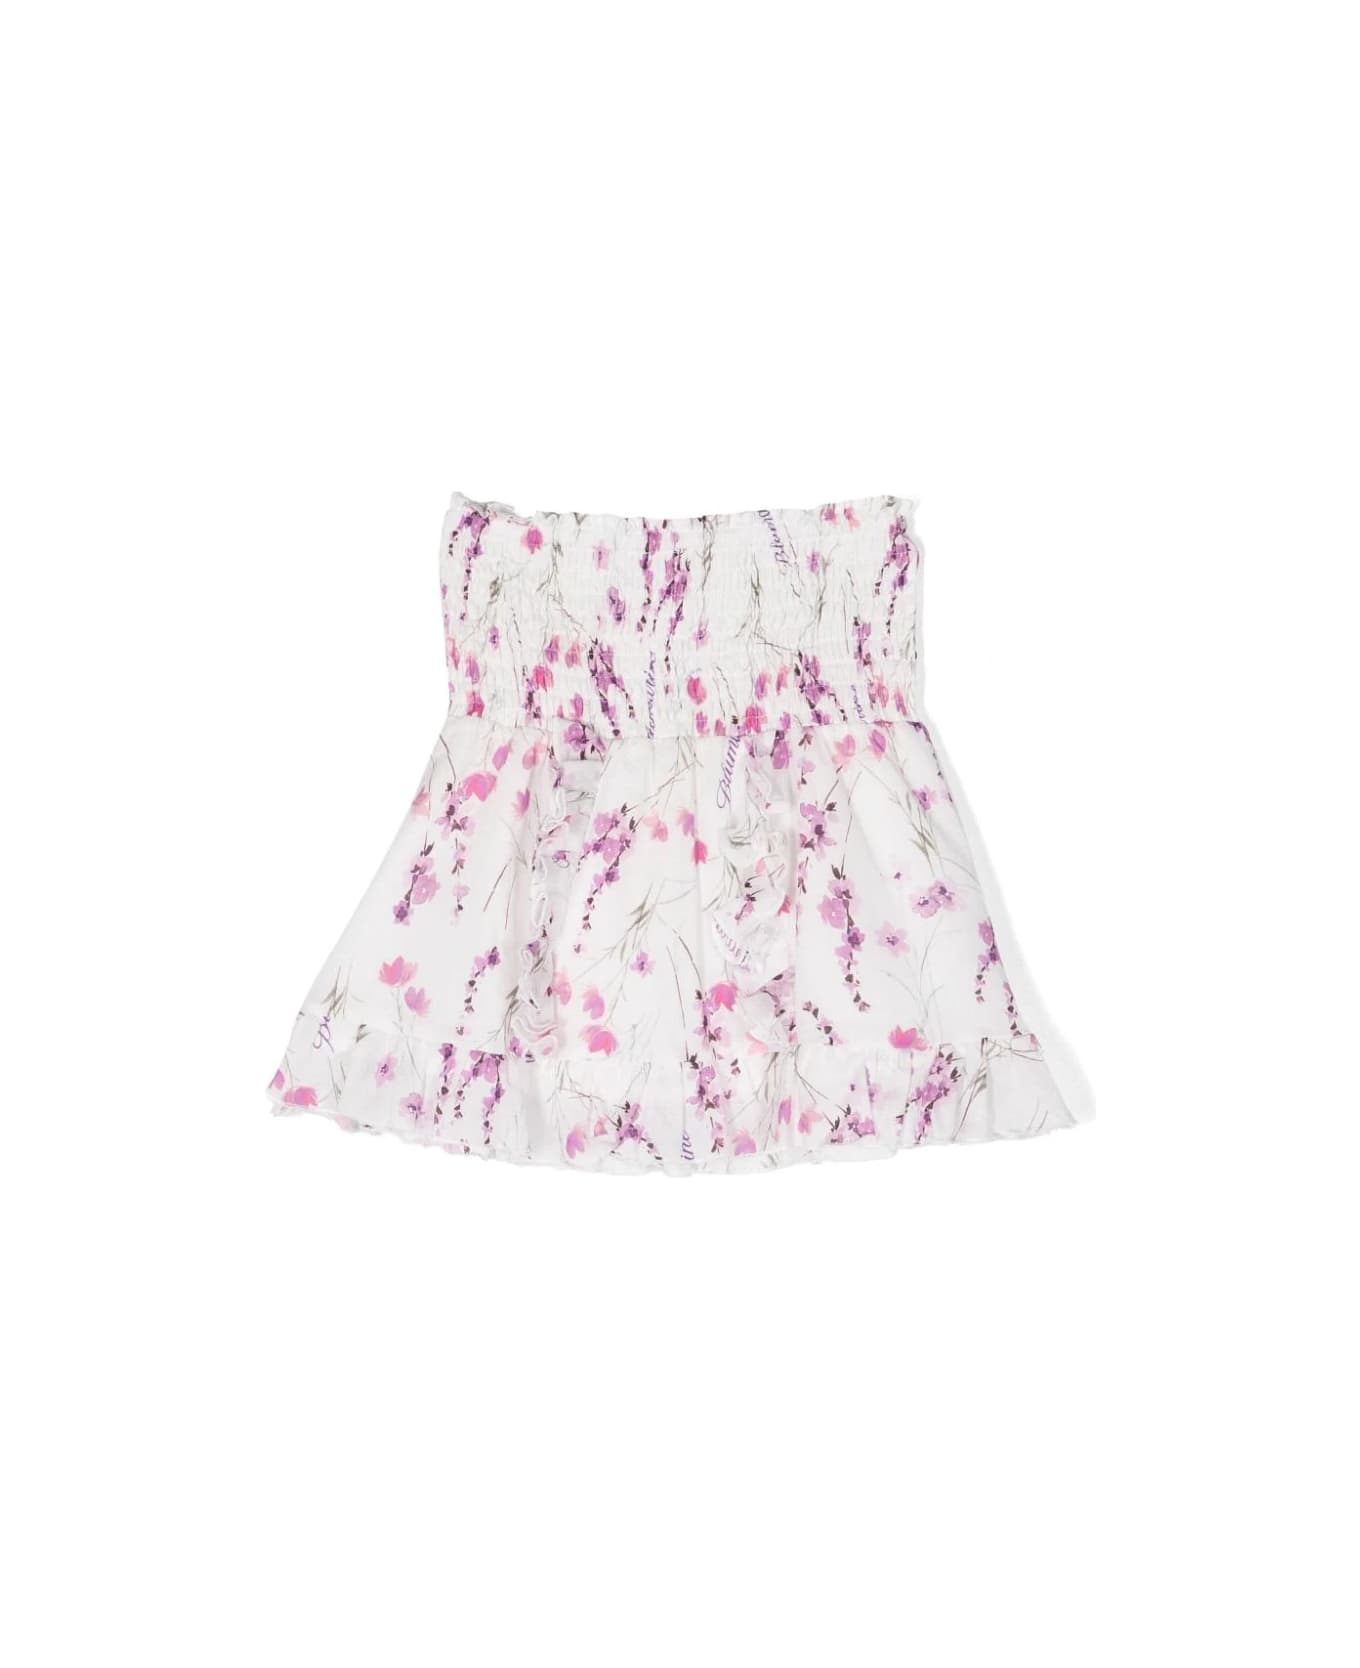 Miss Blumarine White Miniskirt With Ruffles And Floral Print - White ボトムス